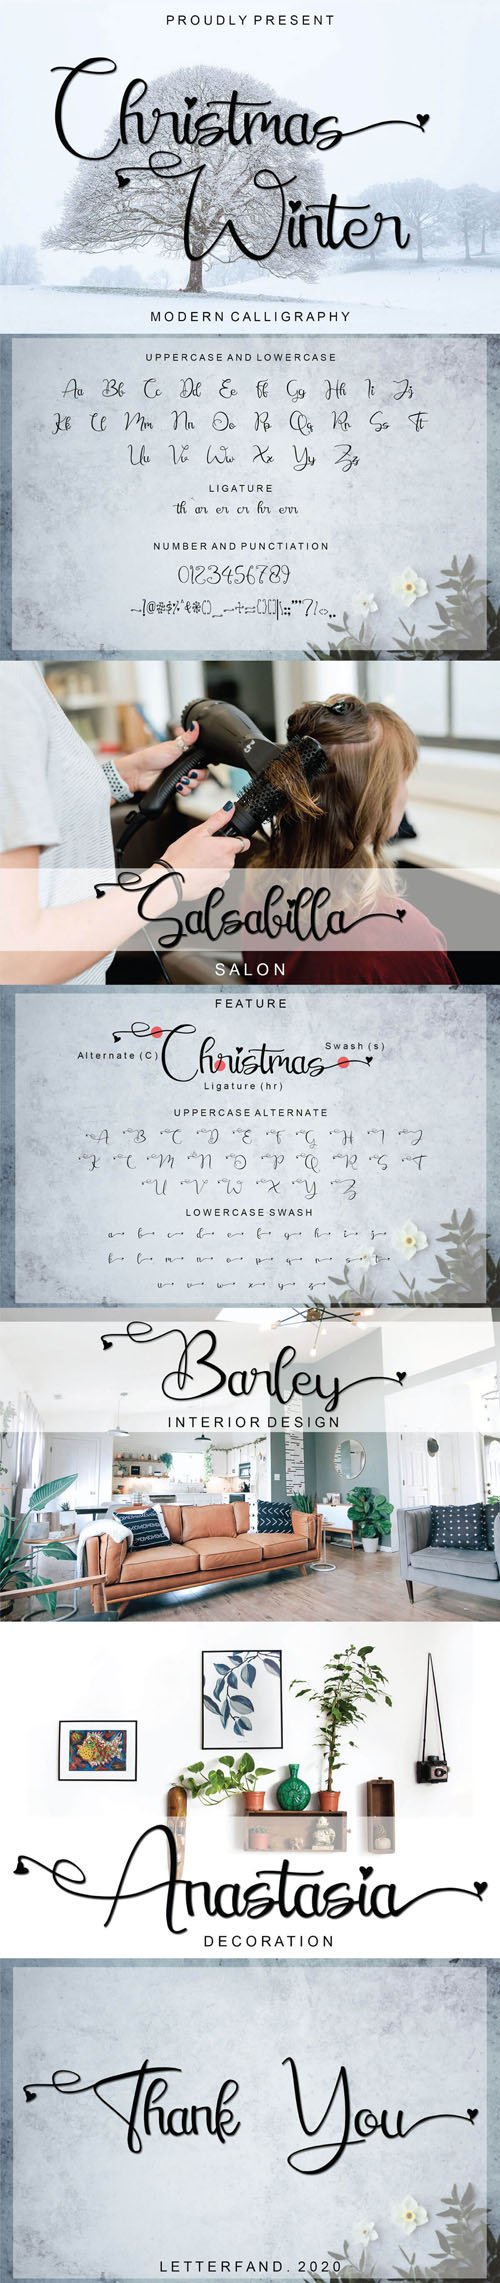 Christmas Winter - Modern Calligraphy Font